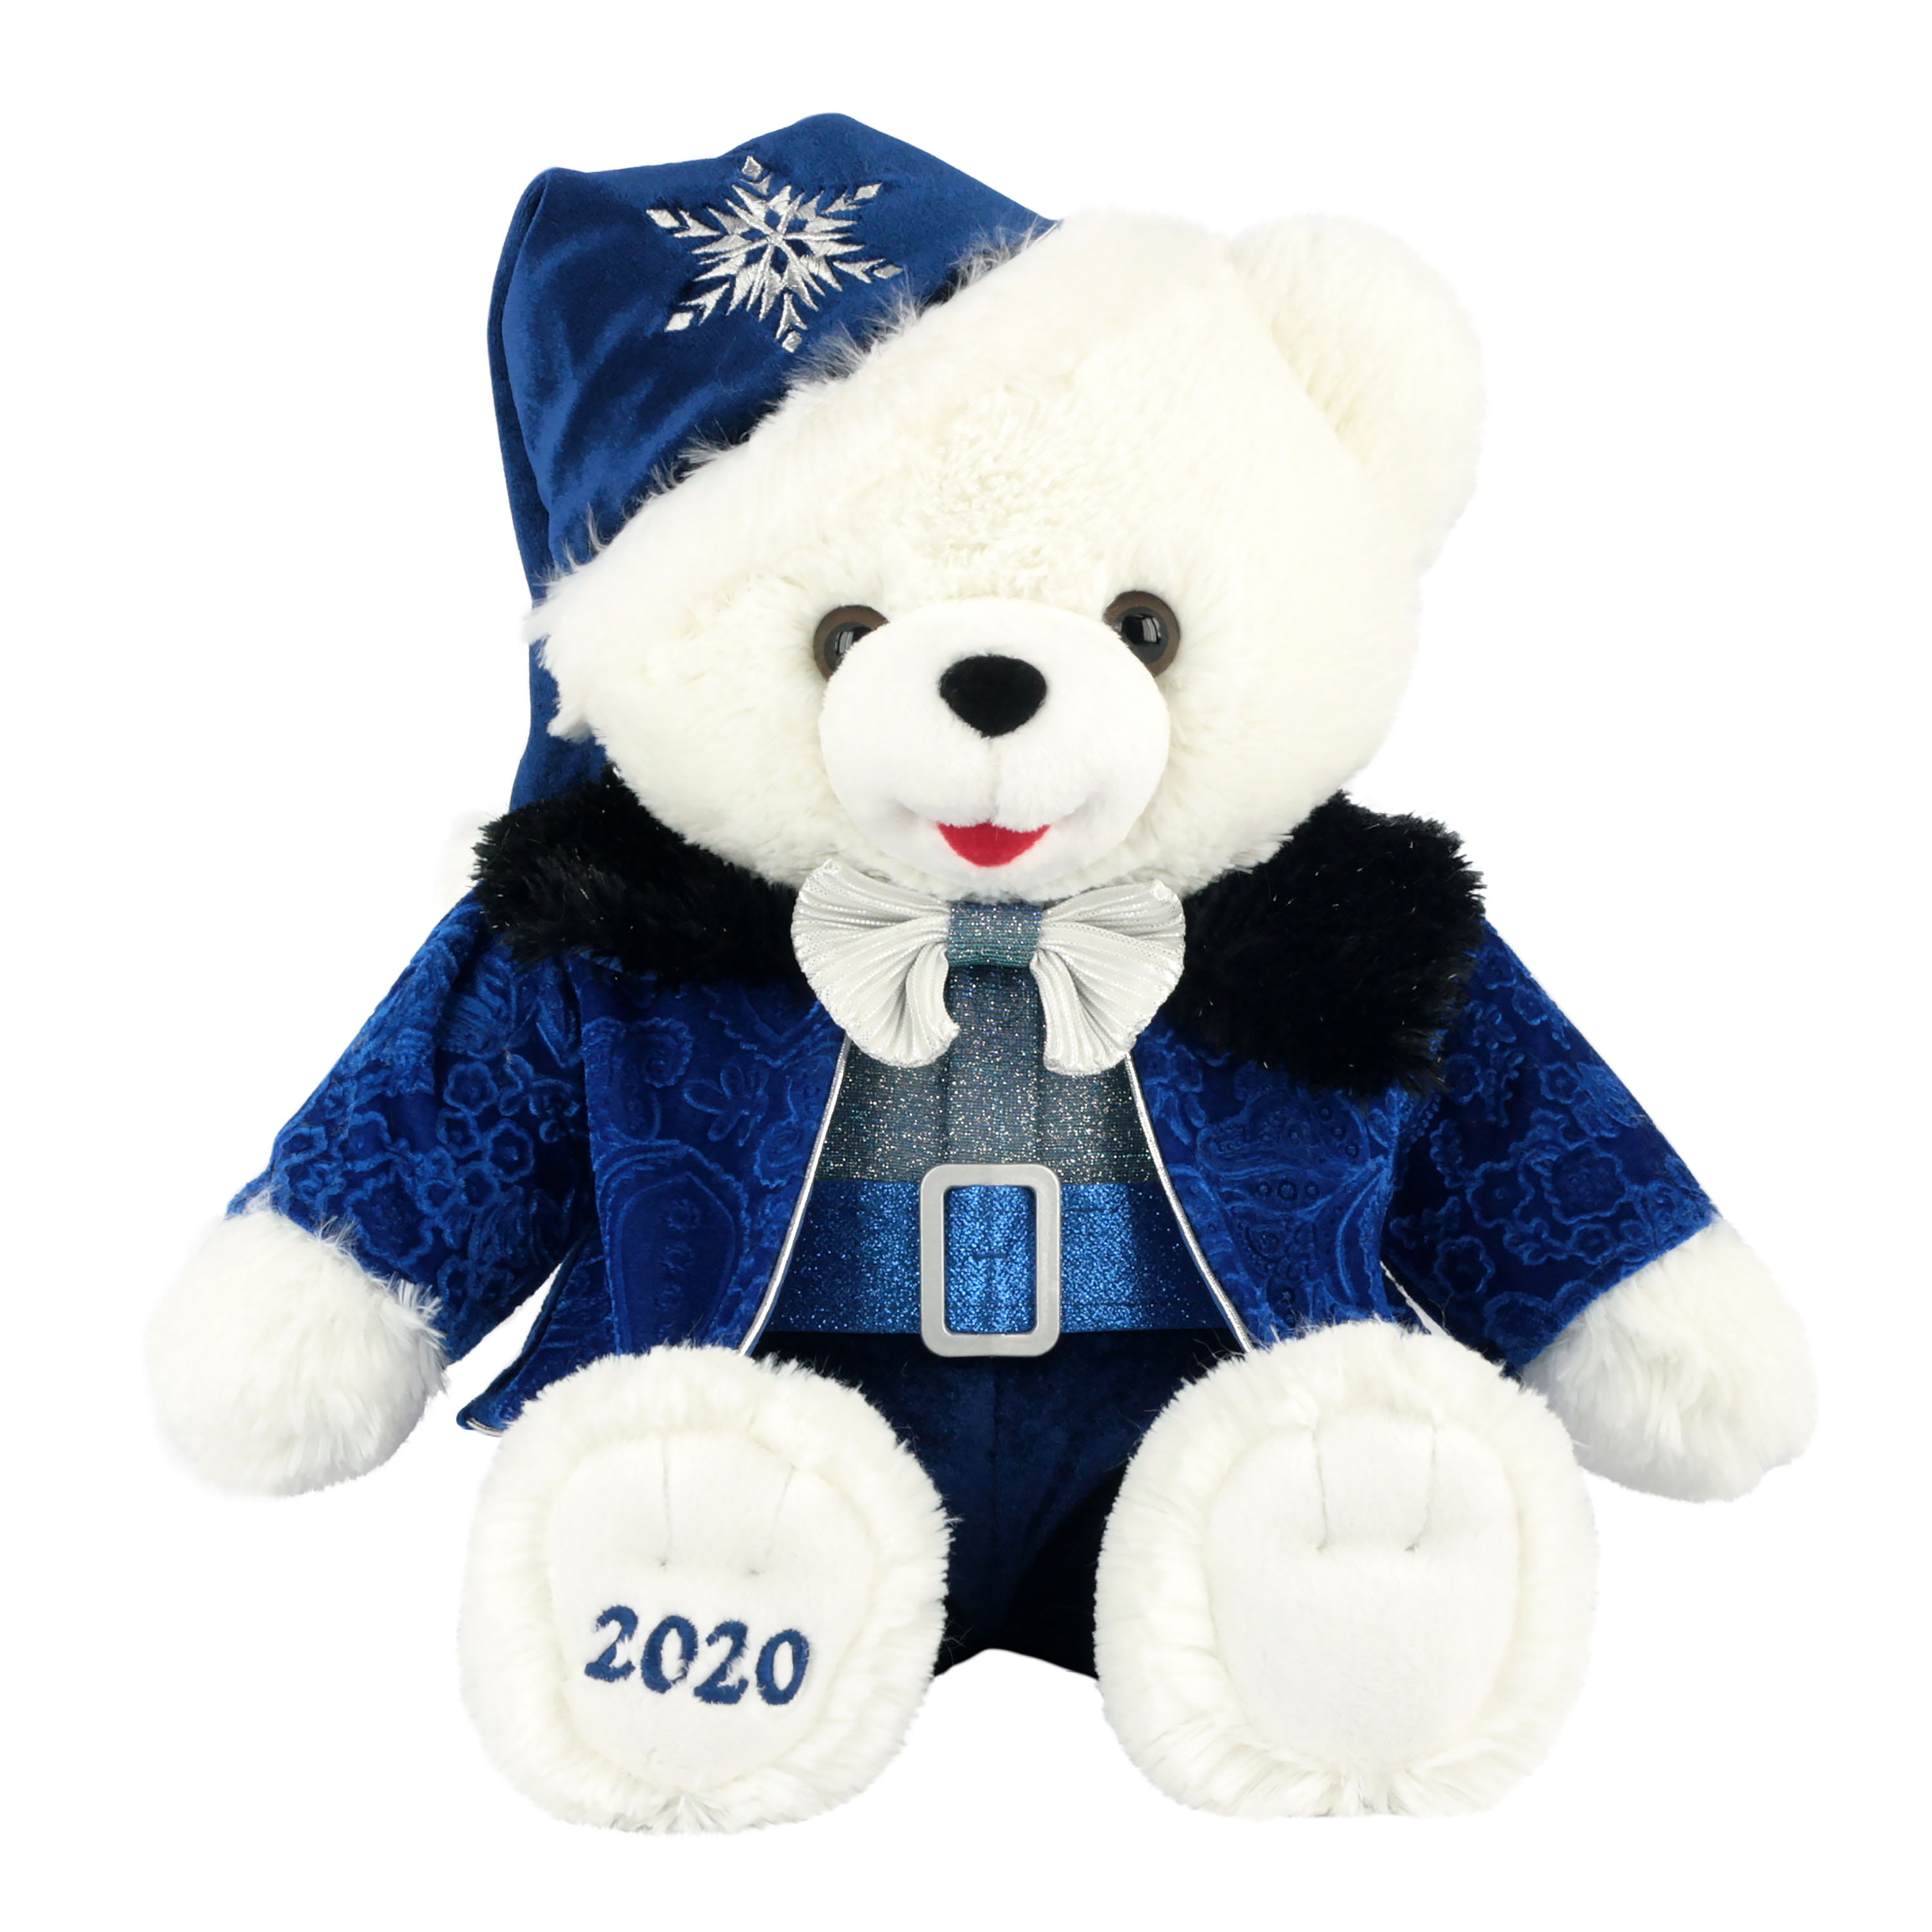 2018 WalMART CHRISTMAS Snowflake TEDDY BEAR White A Boy 20"Blue Outfit Brand NWT 